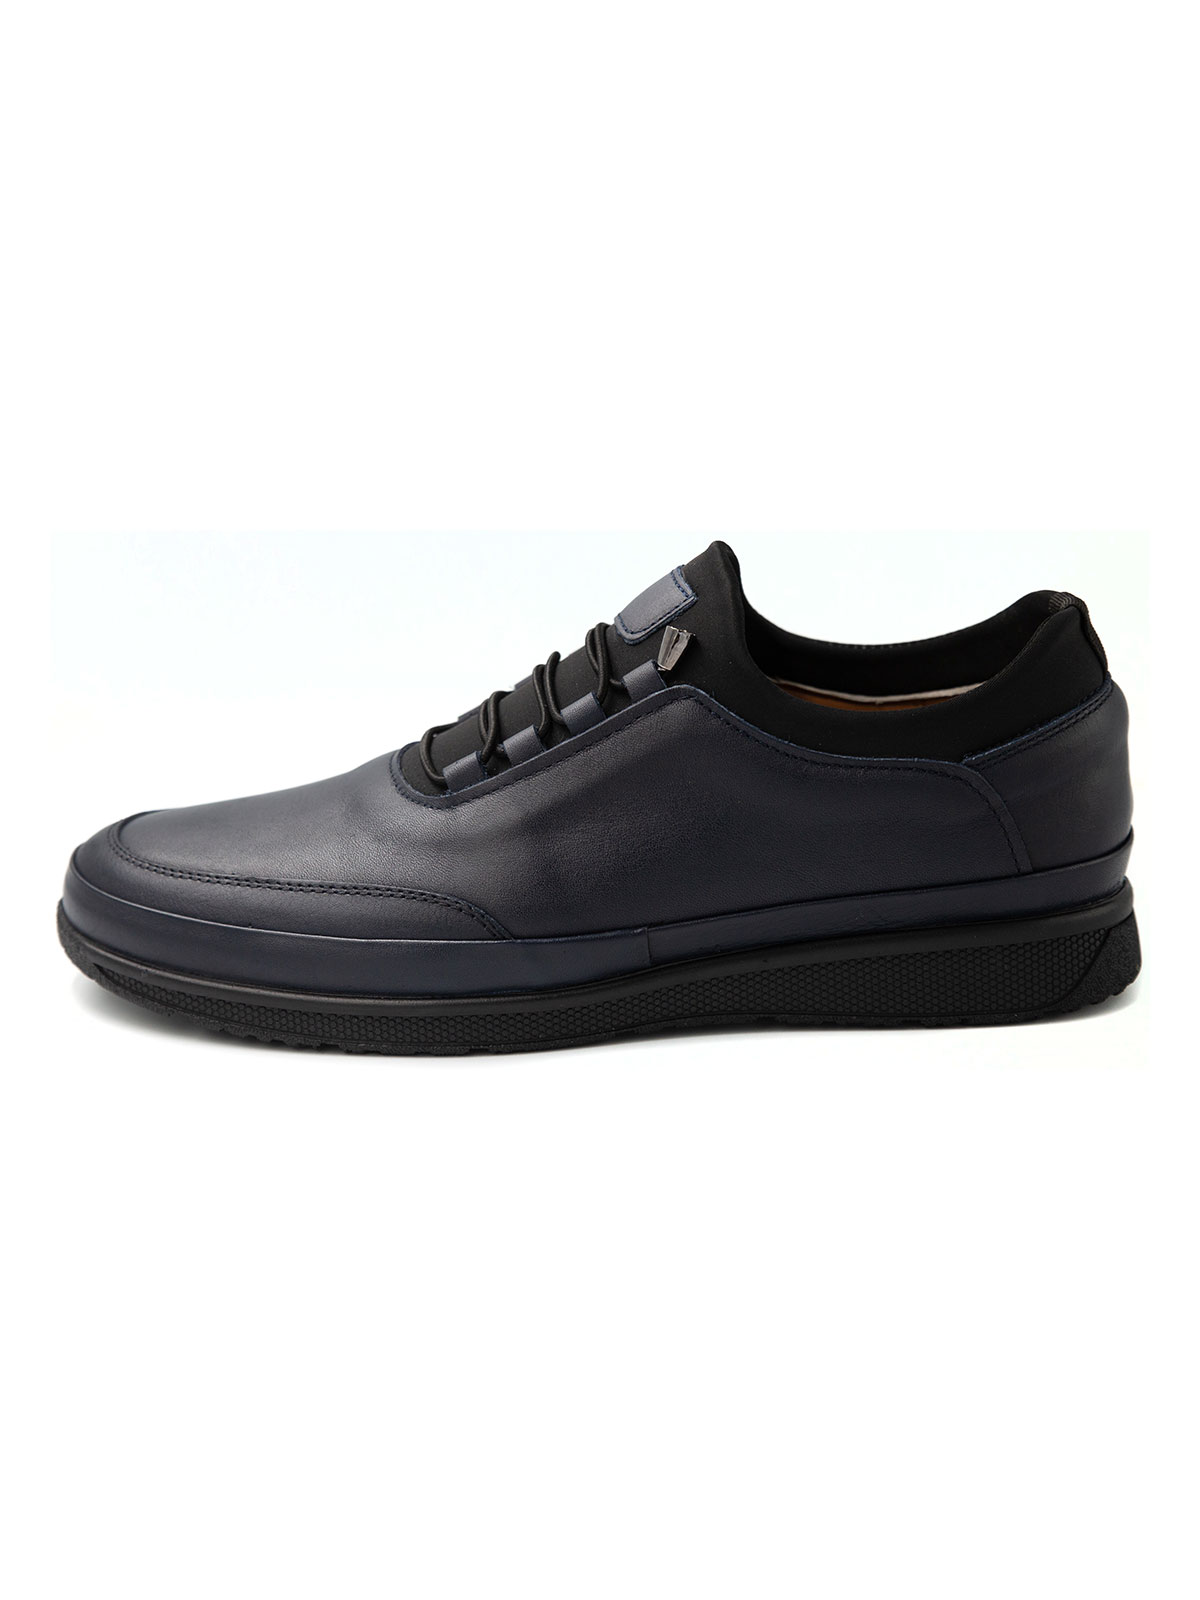 Pantofi din piele cu material textil - 81096 - € 41.62 img3